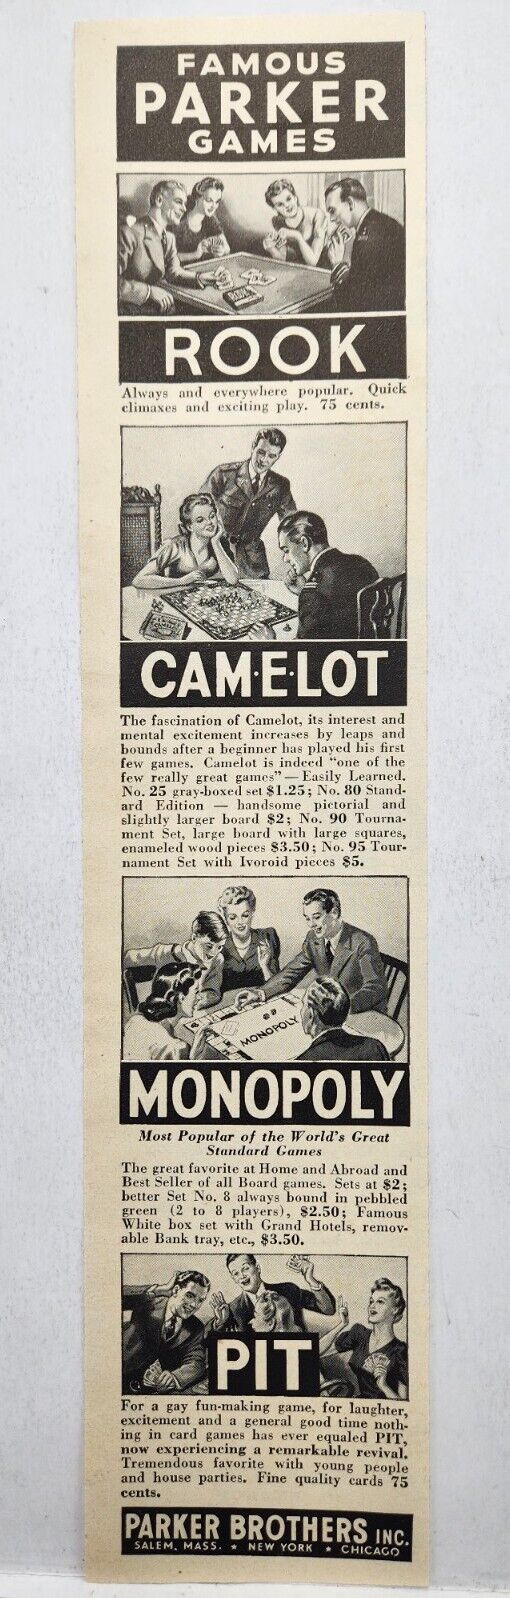 1944 Monopoly Rook Camelot Pit Parker Brothers Games Vintage Print Ad Art Deco